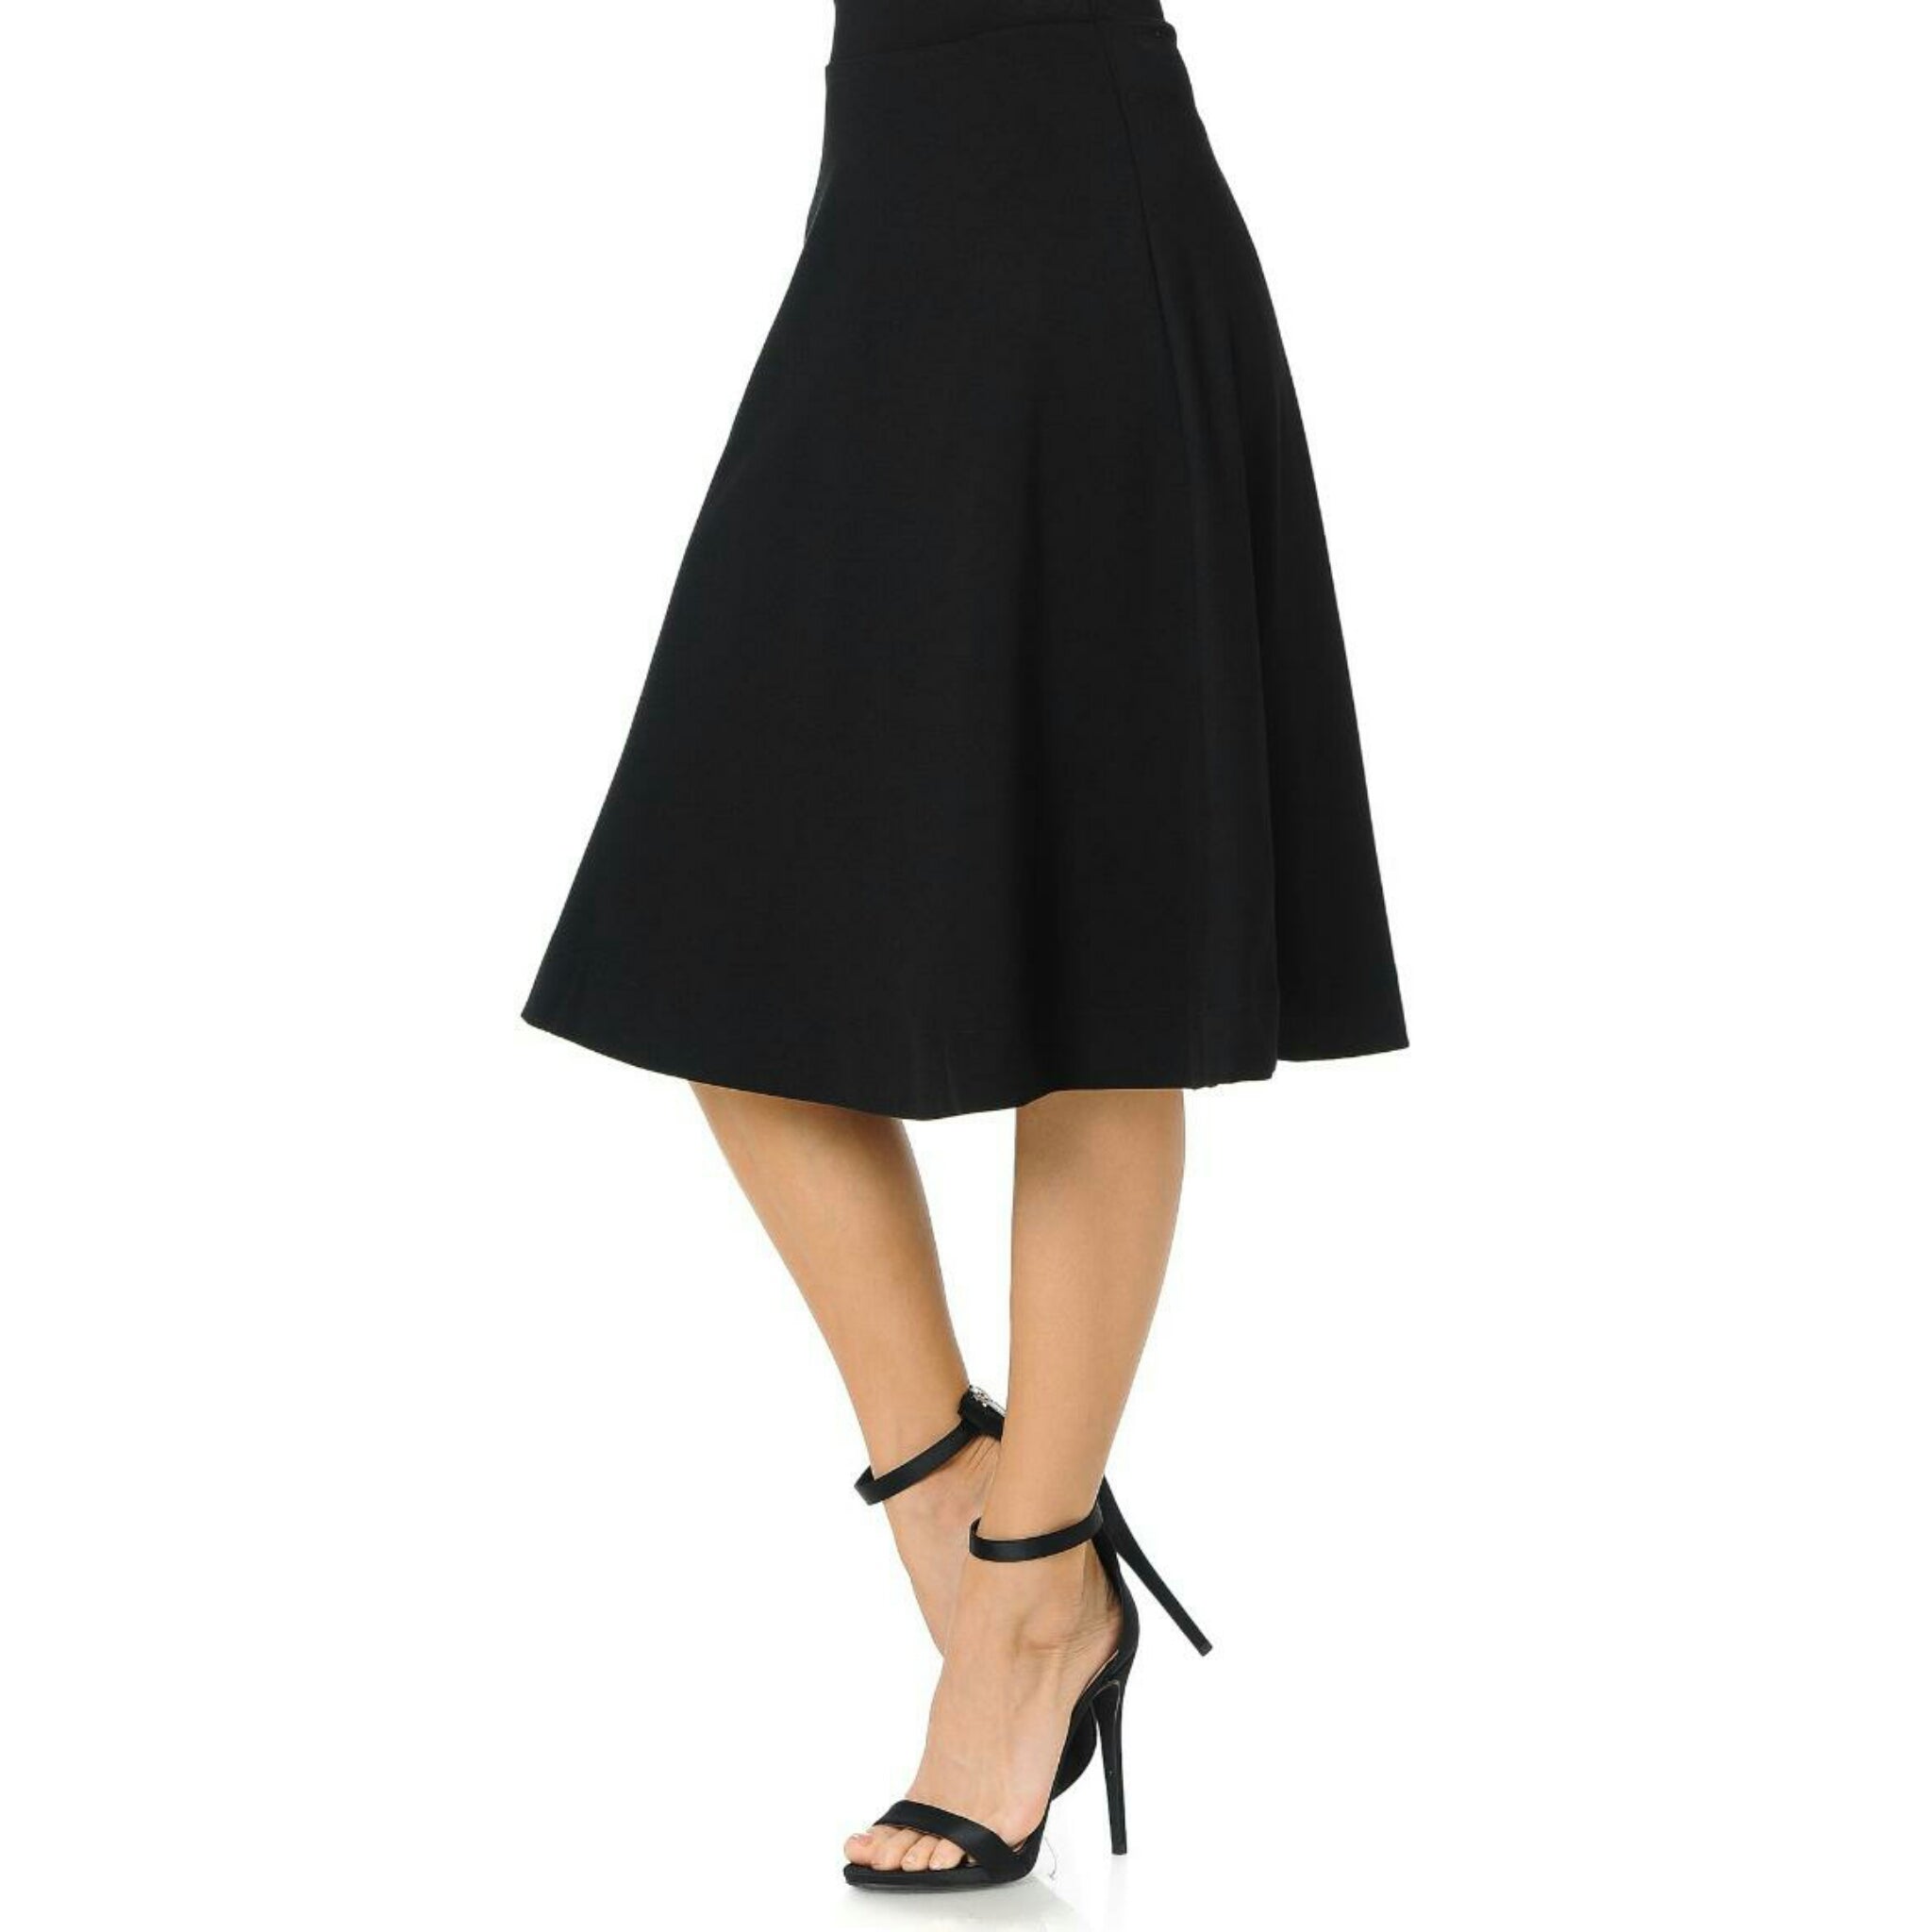 Ponti Ivee Aline Skirt: Black 27" – The Mimi Boutique